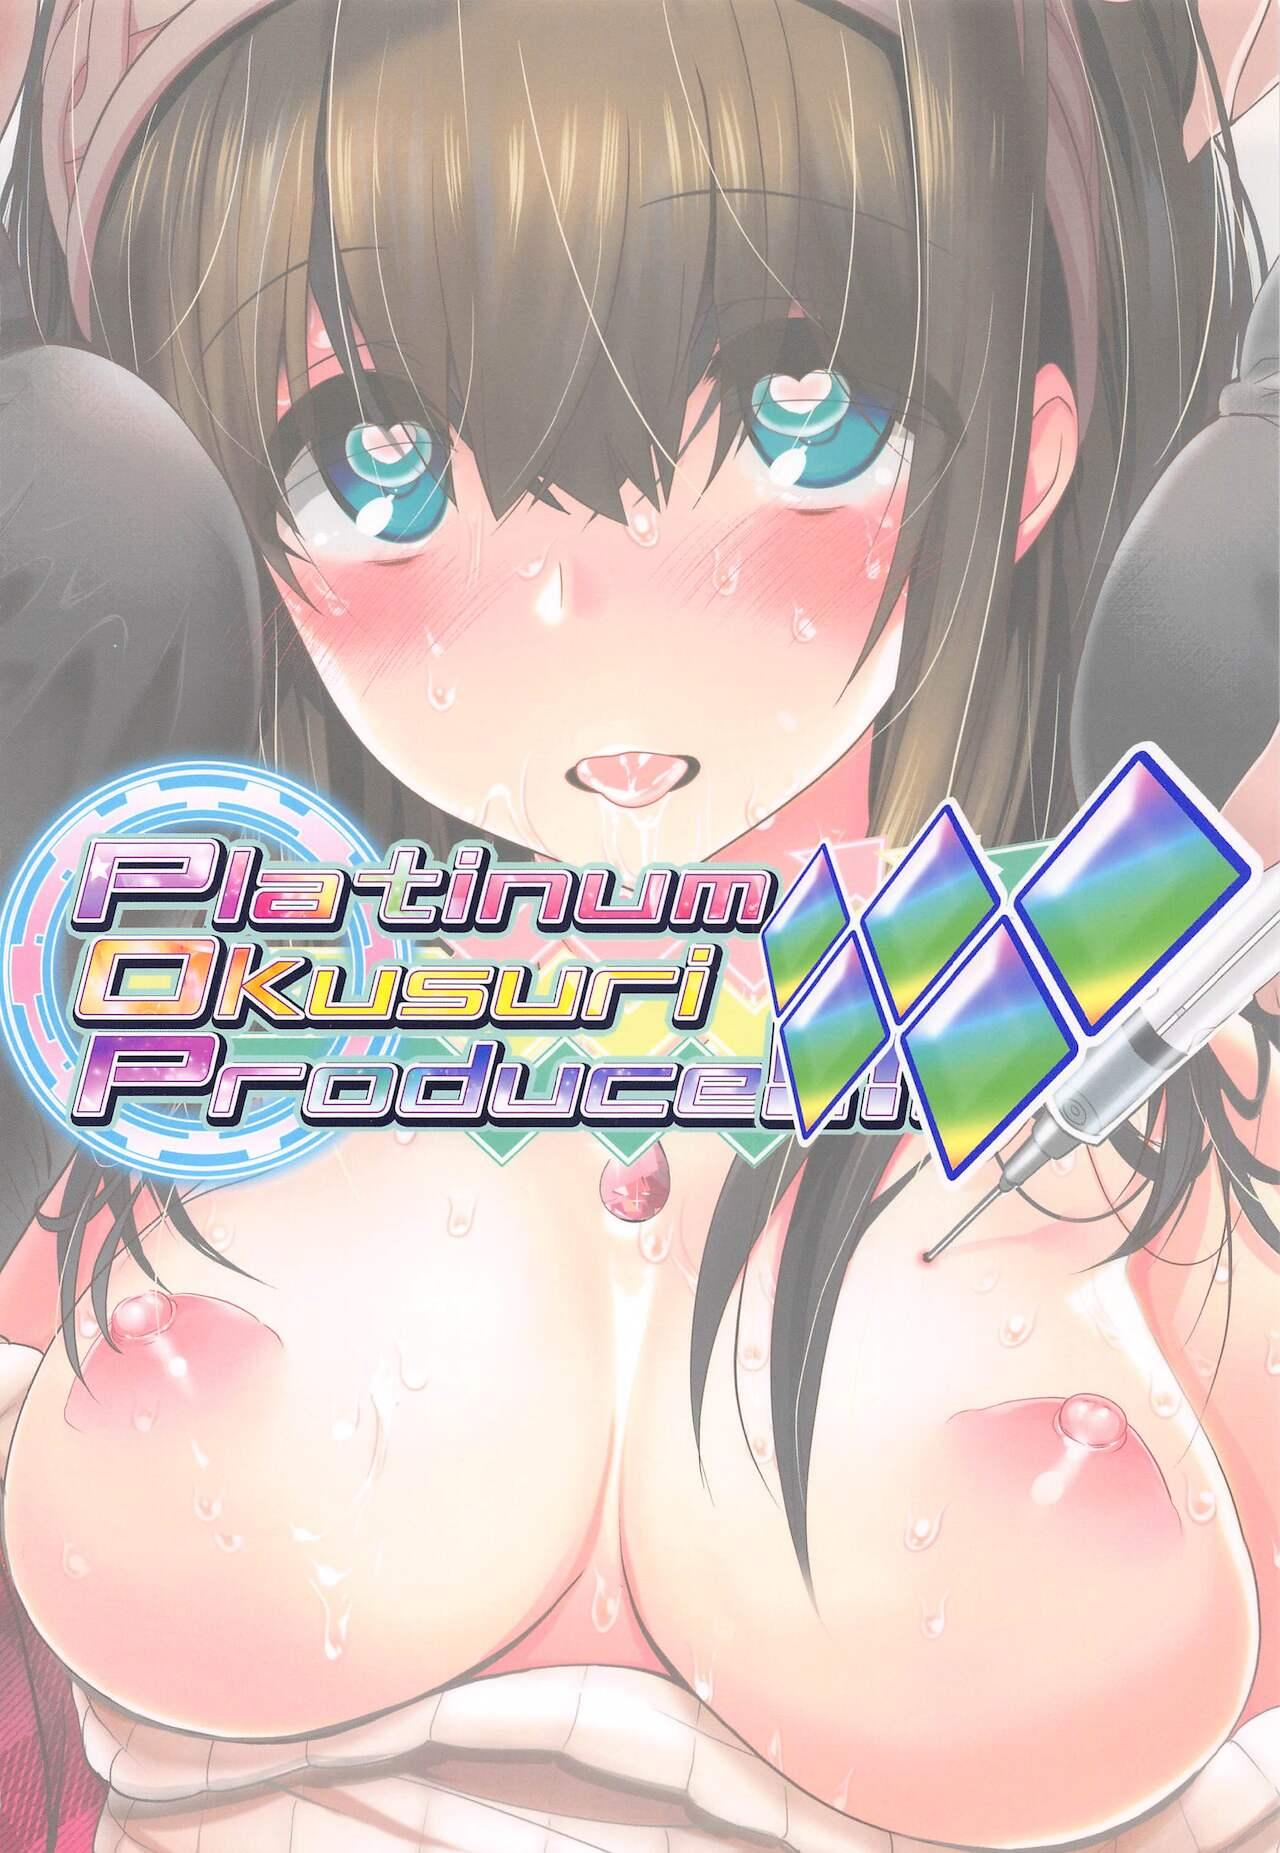 Platinum Okusuri Produce!!!! ◇◇◇◇◇ 17